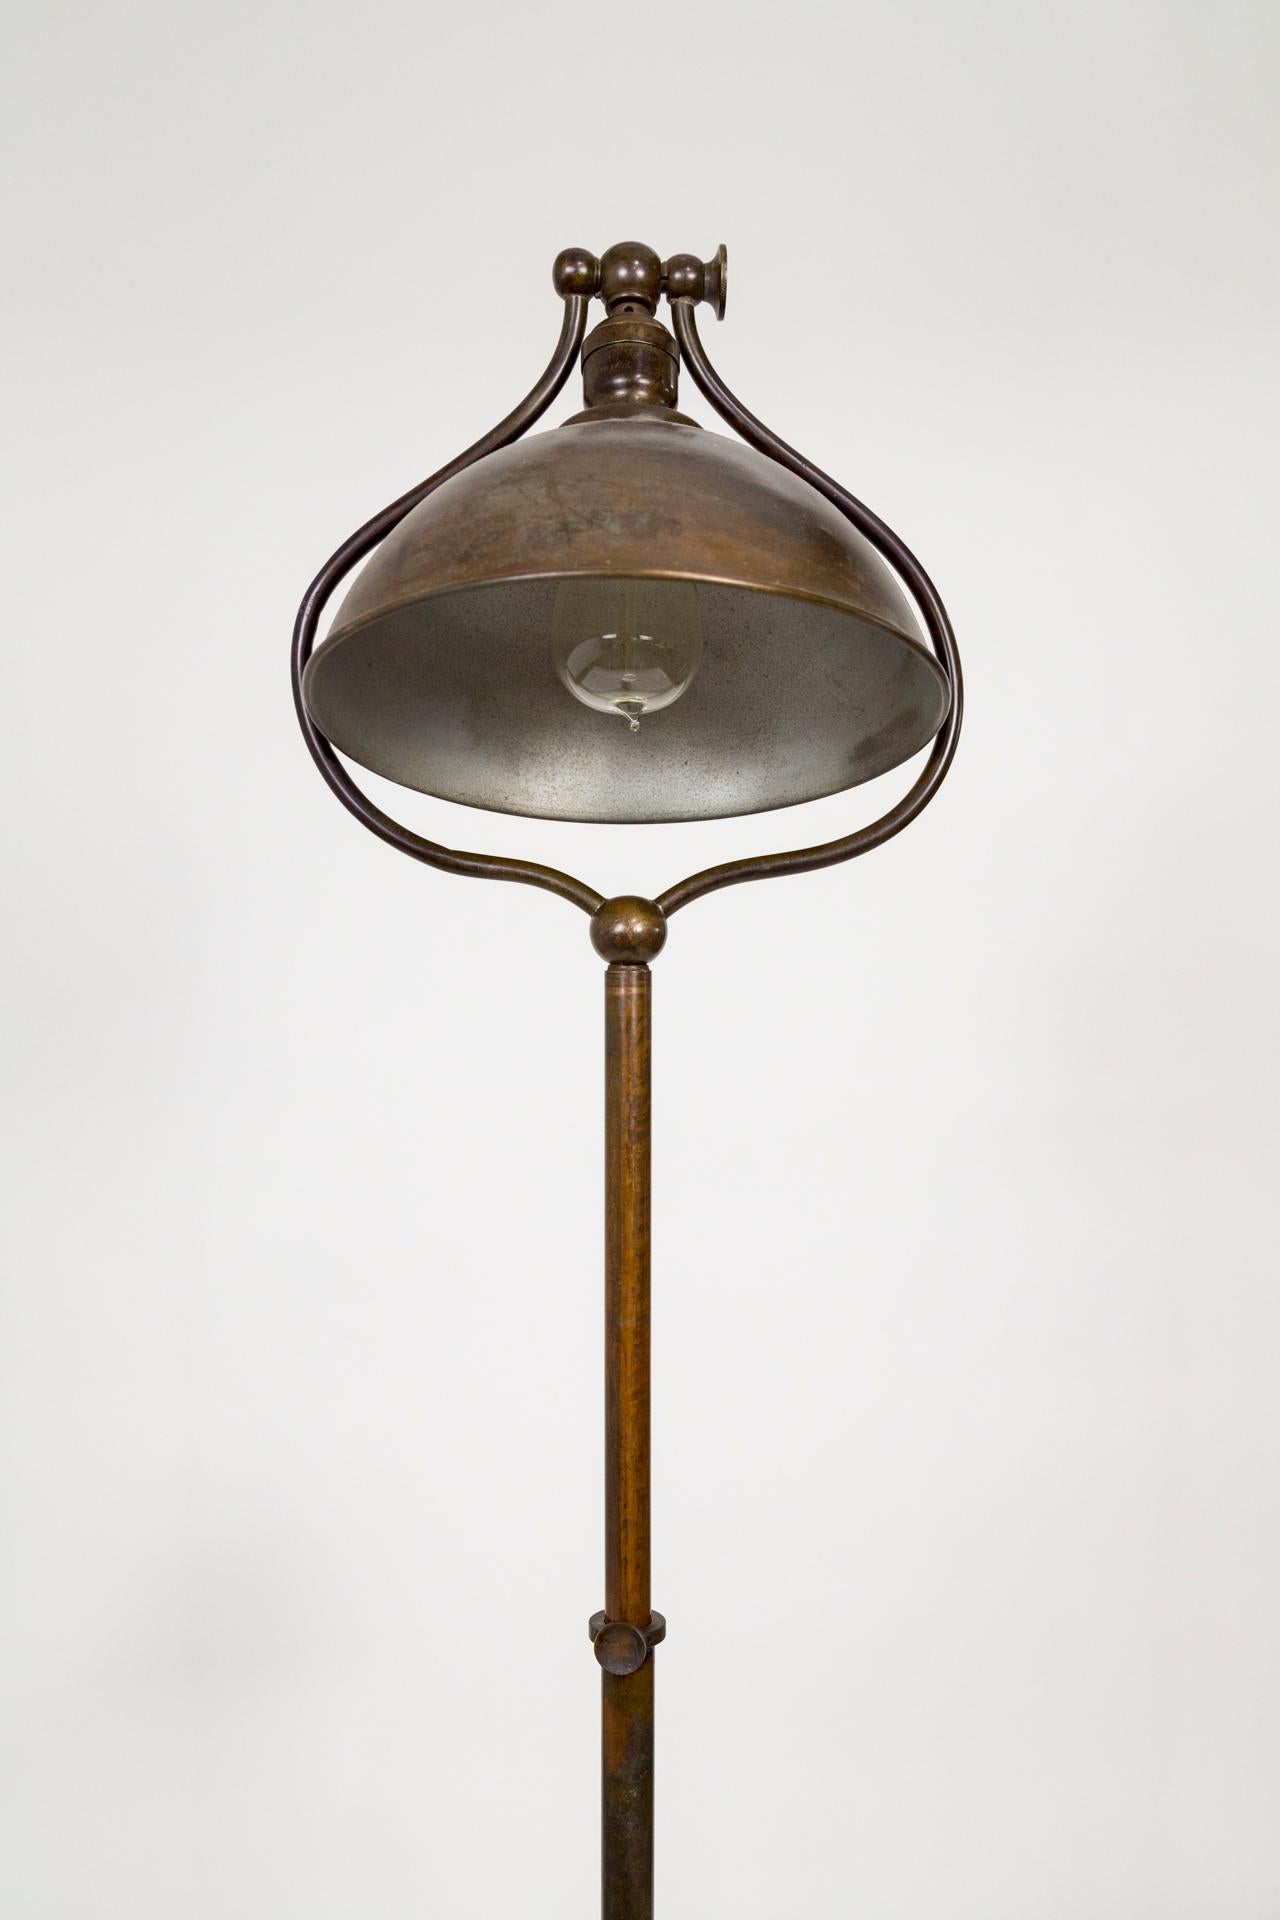 American Arts & Crafts Bradley & Hubbard Adjustable Brass Floor Lamp